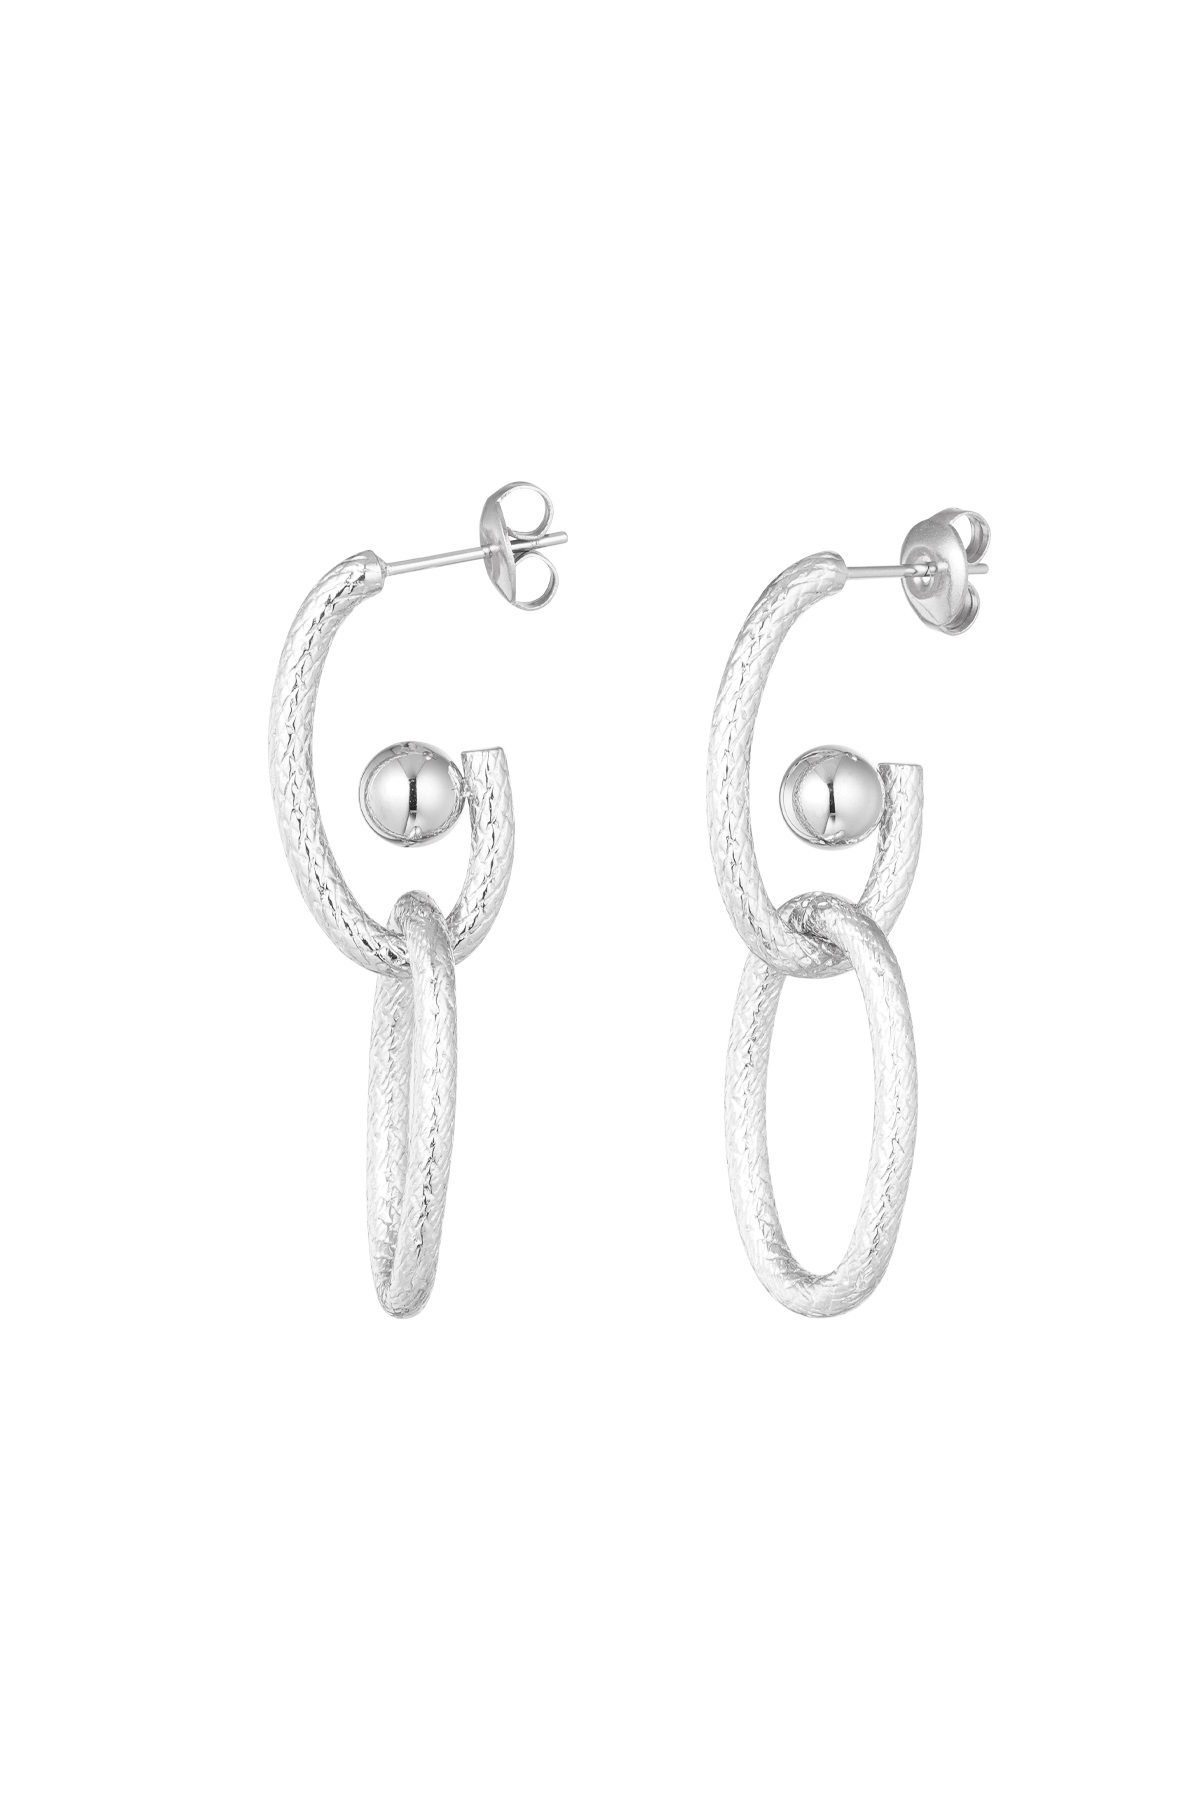 Aesthetic link earrings - silver h5 